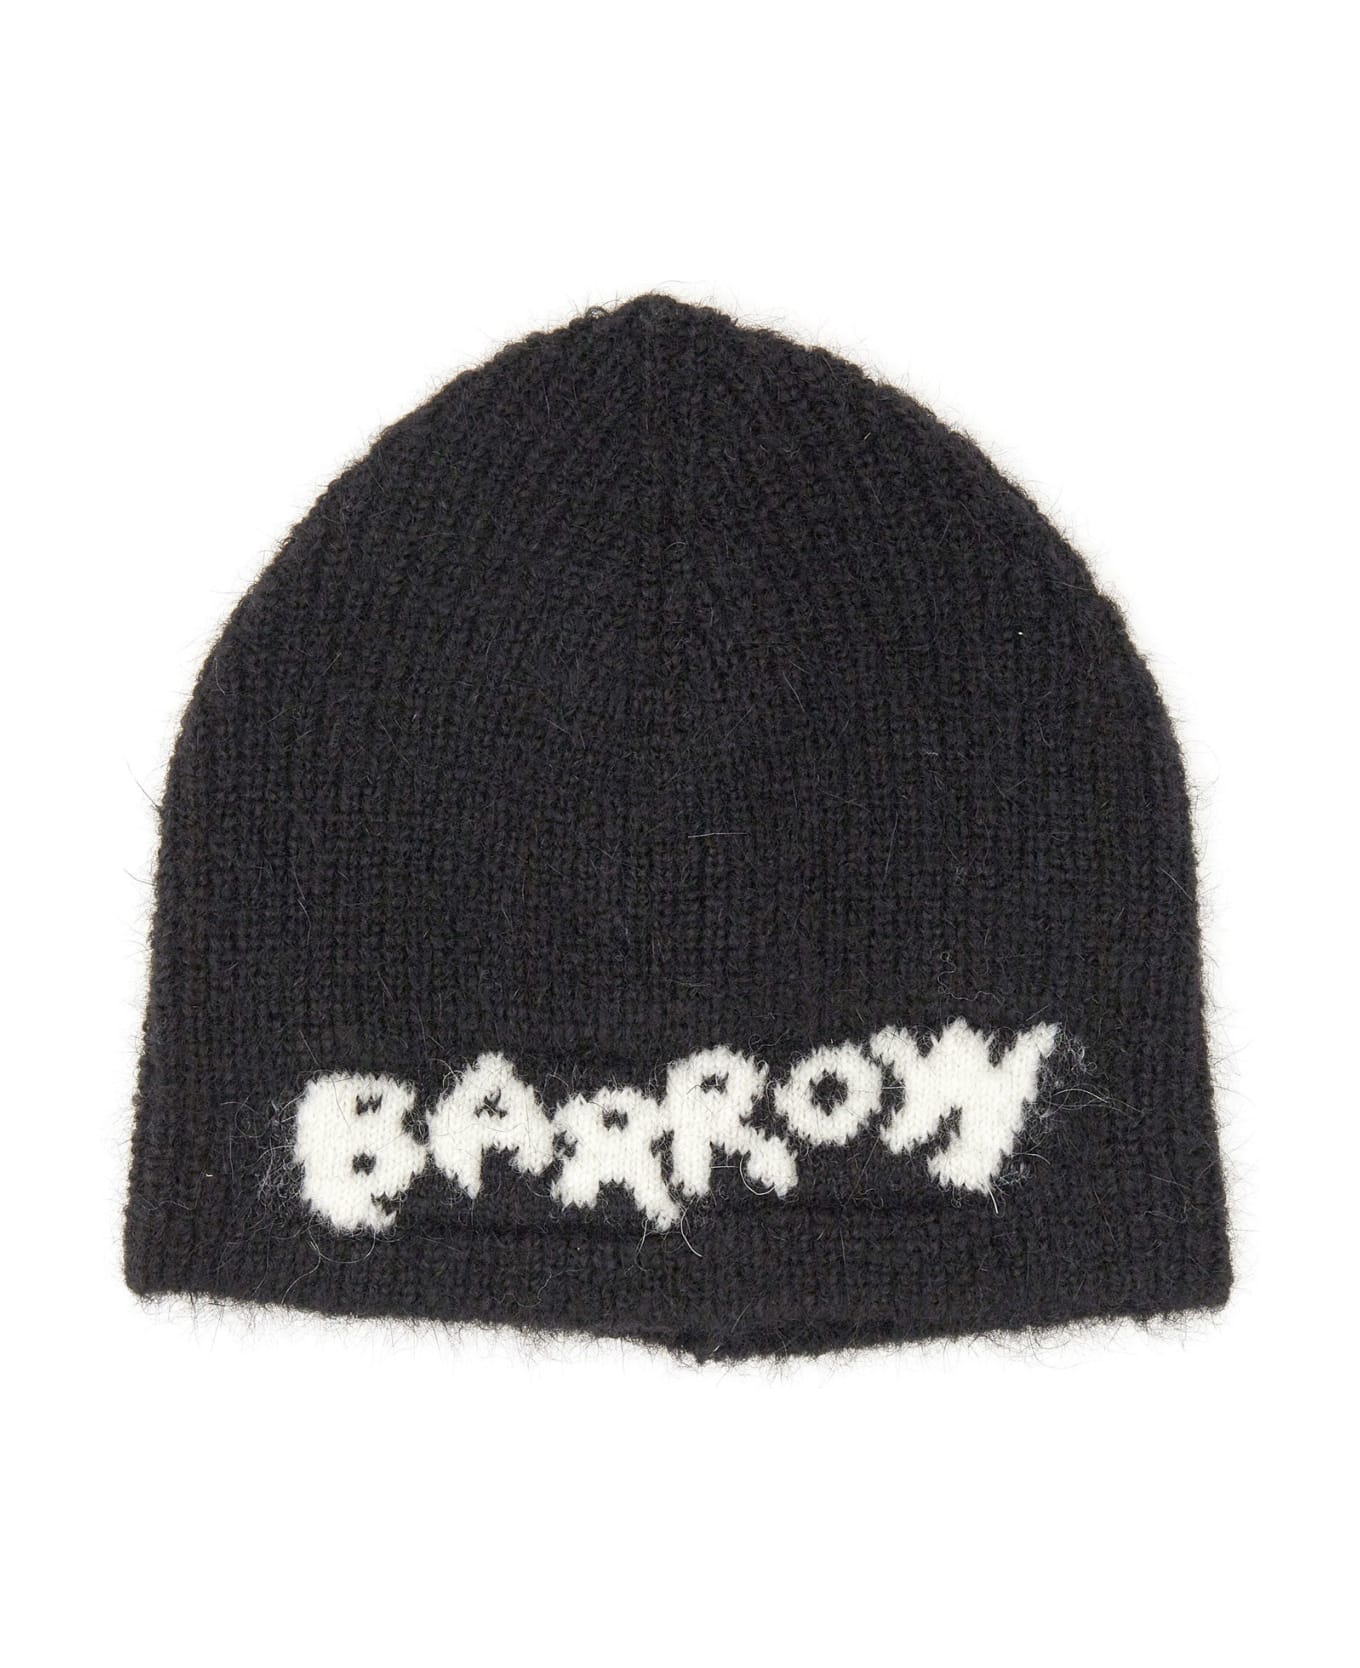 Barrow Beanie Hat - Nero/black